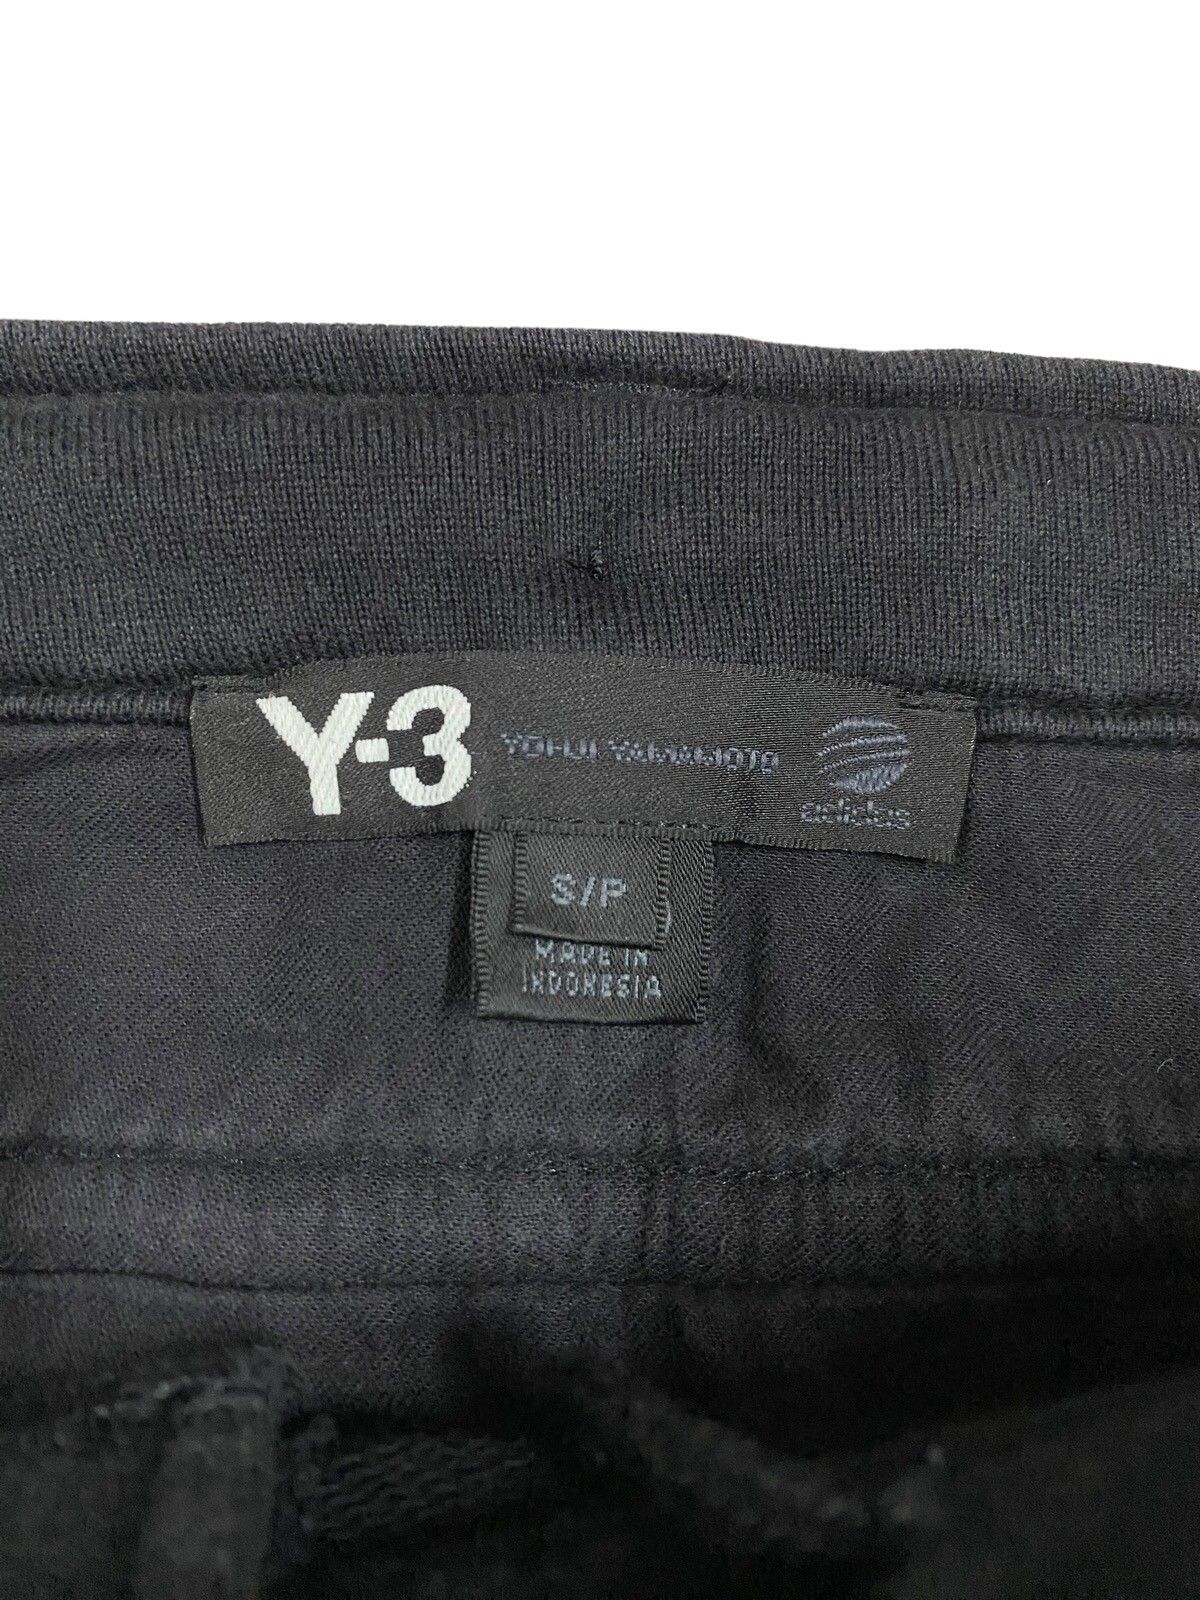 Authentic🔥Adidas Y-3 X Yohji Yamamoto Sweatpants Cargo Black - 14